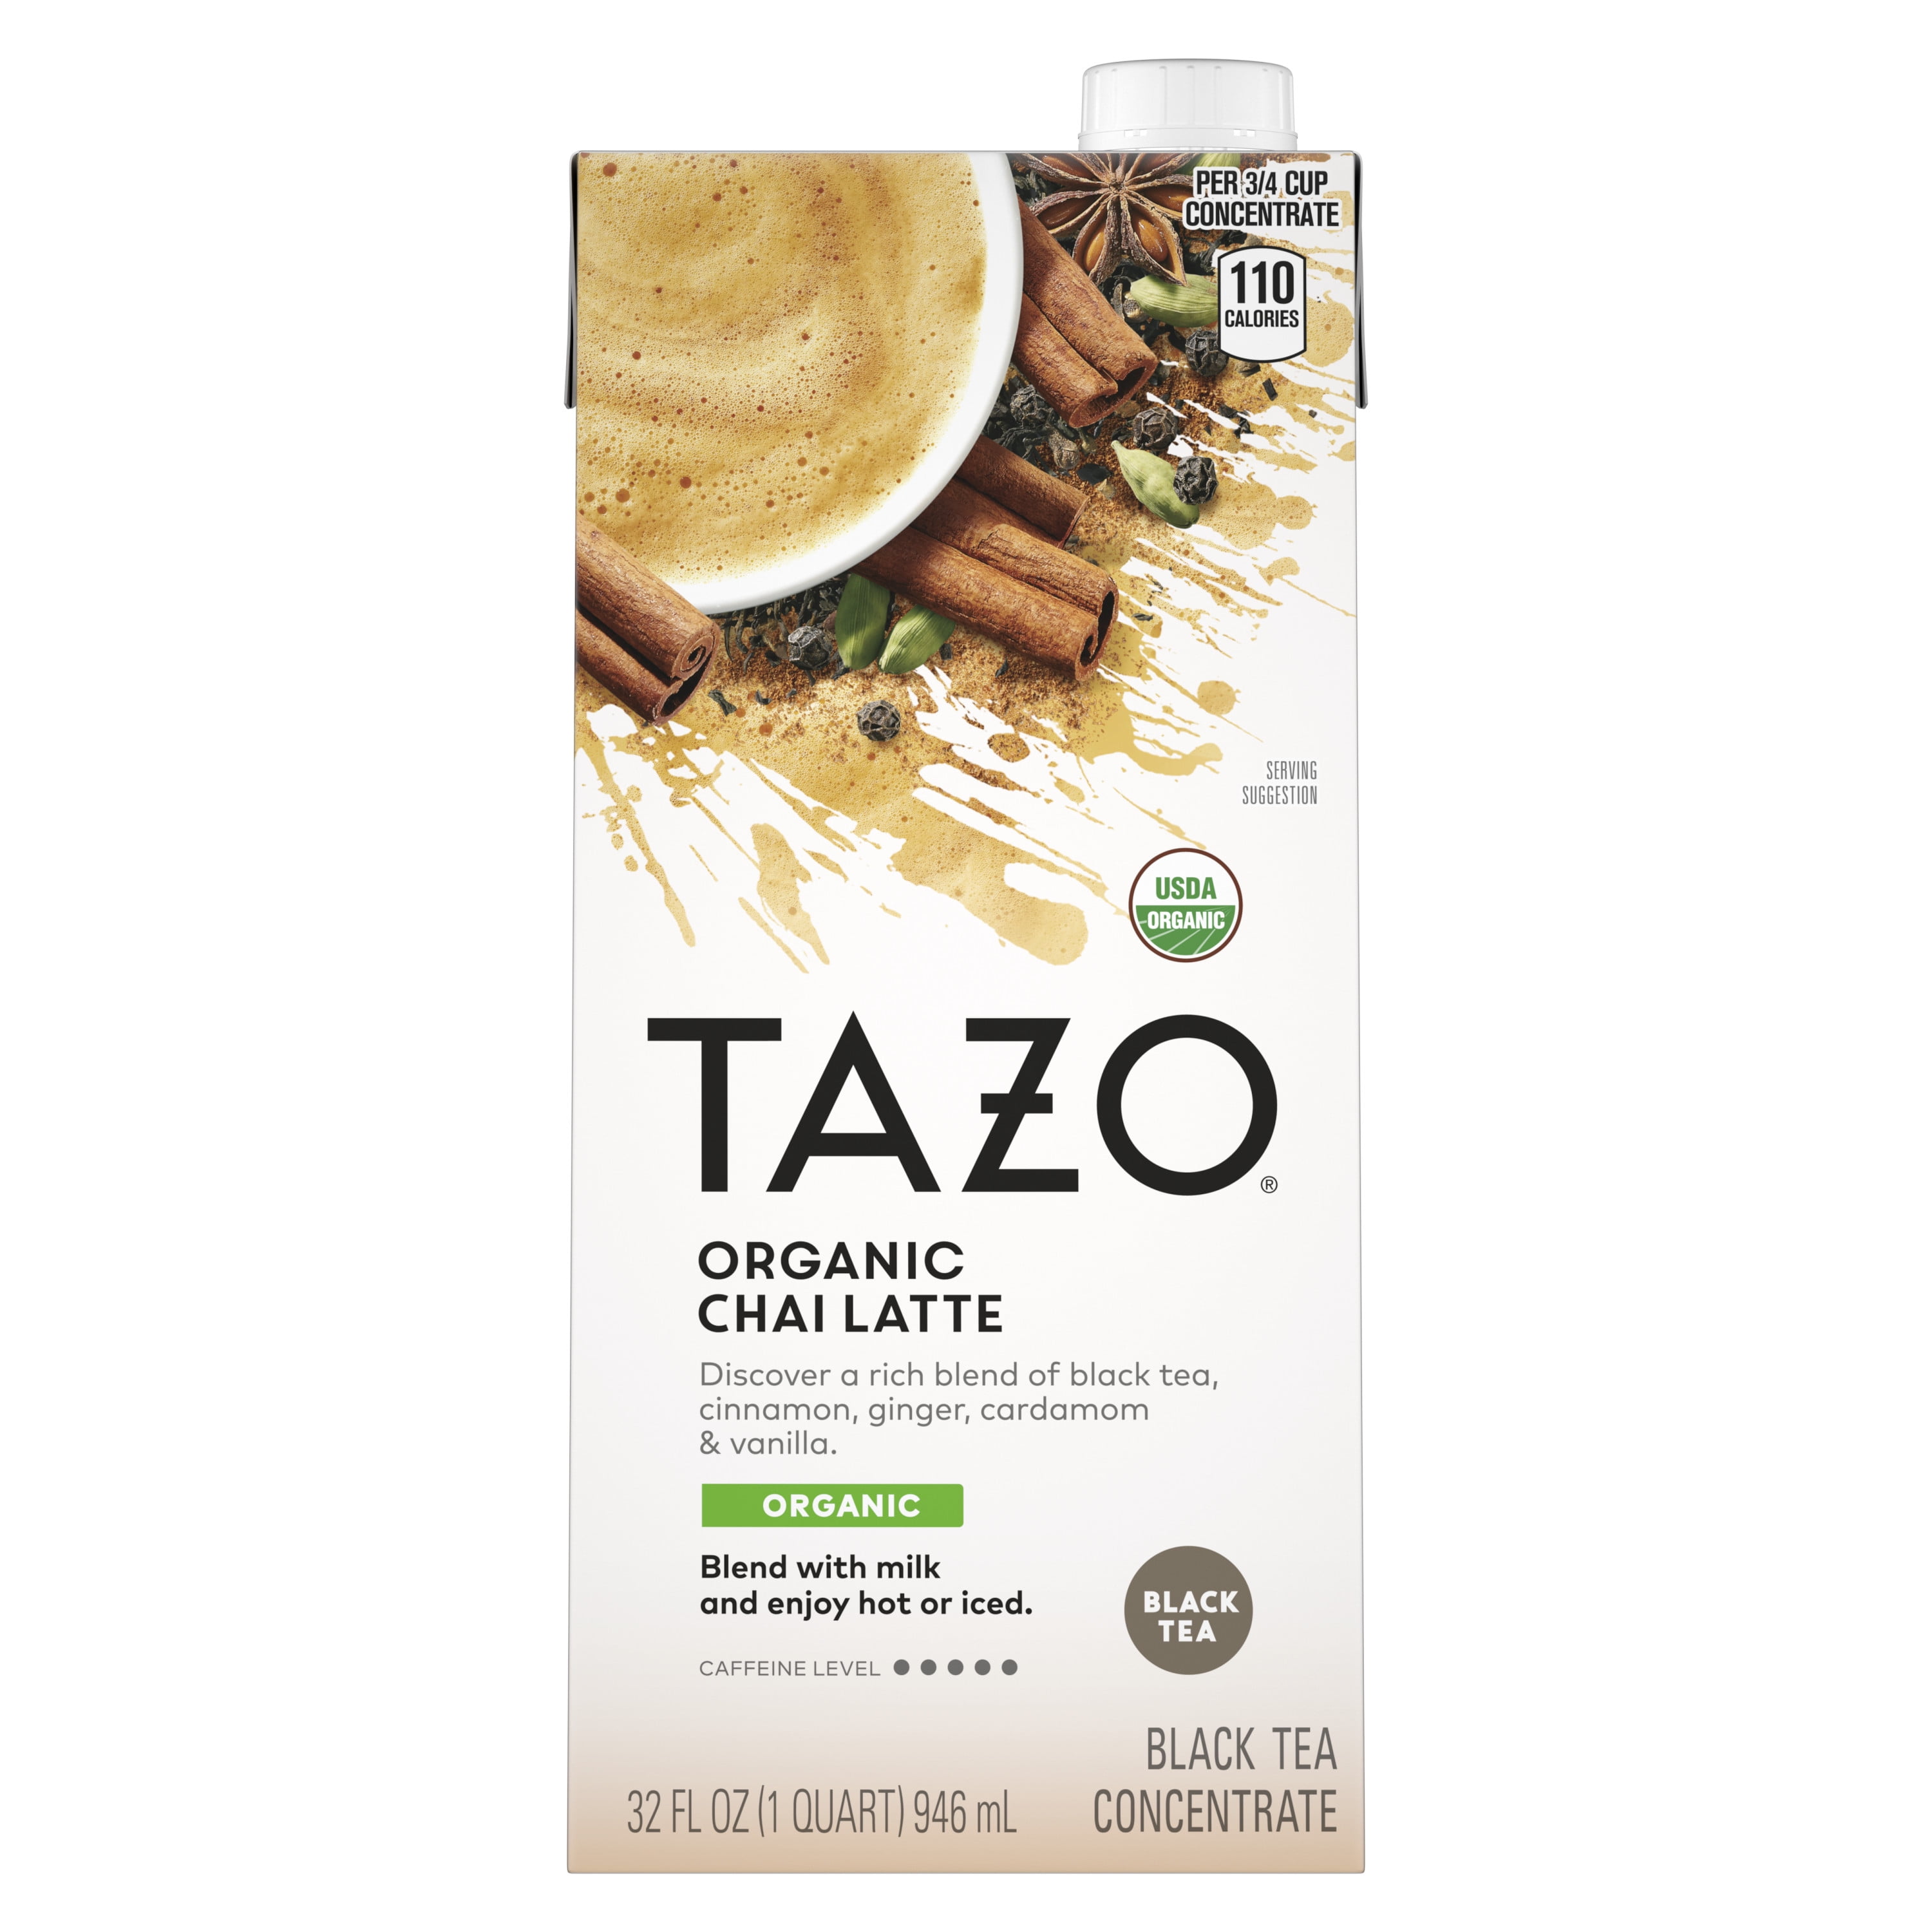 TAZO Spiced Chai Latte Iced Tea Concentrate, Black Tea, 32 oz Carton